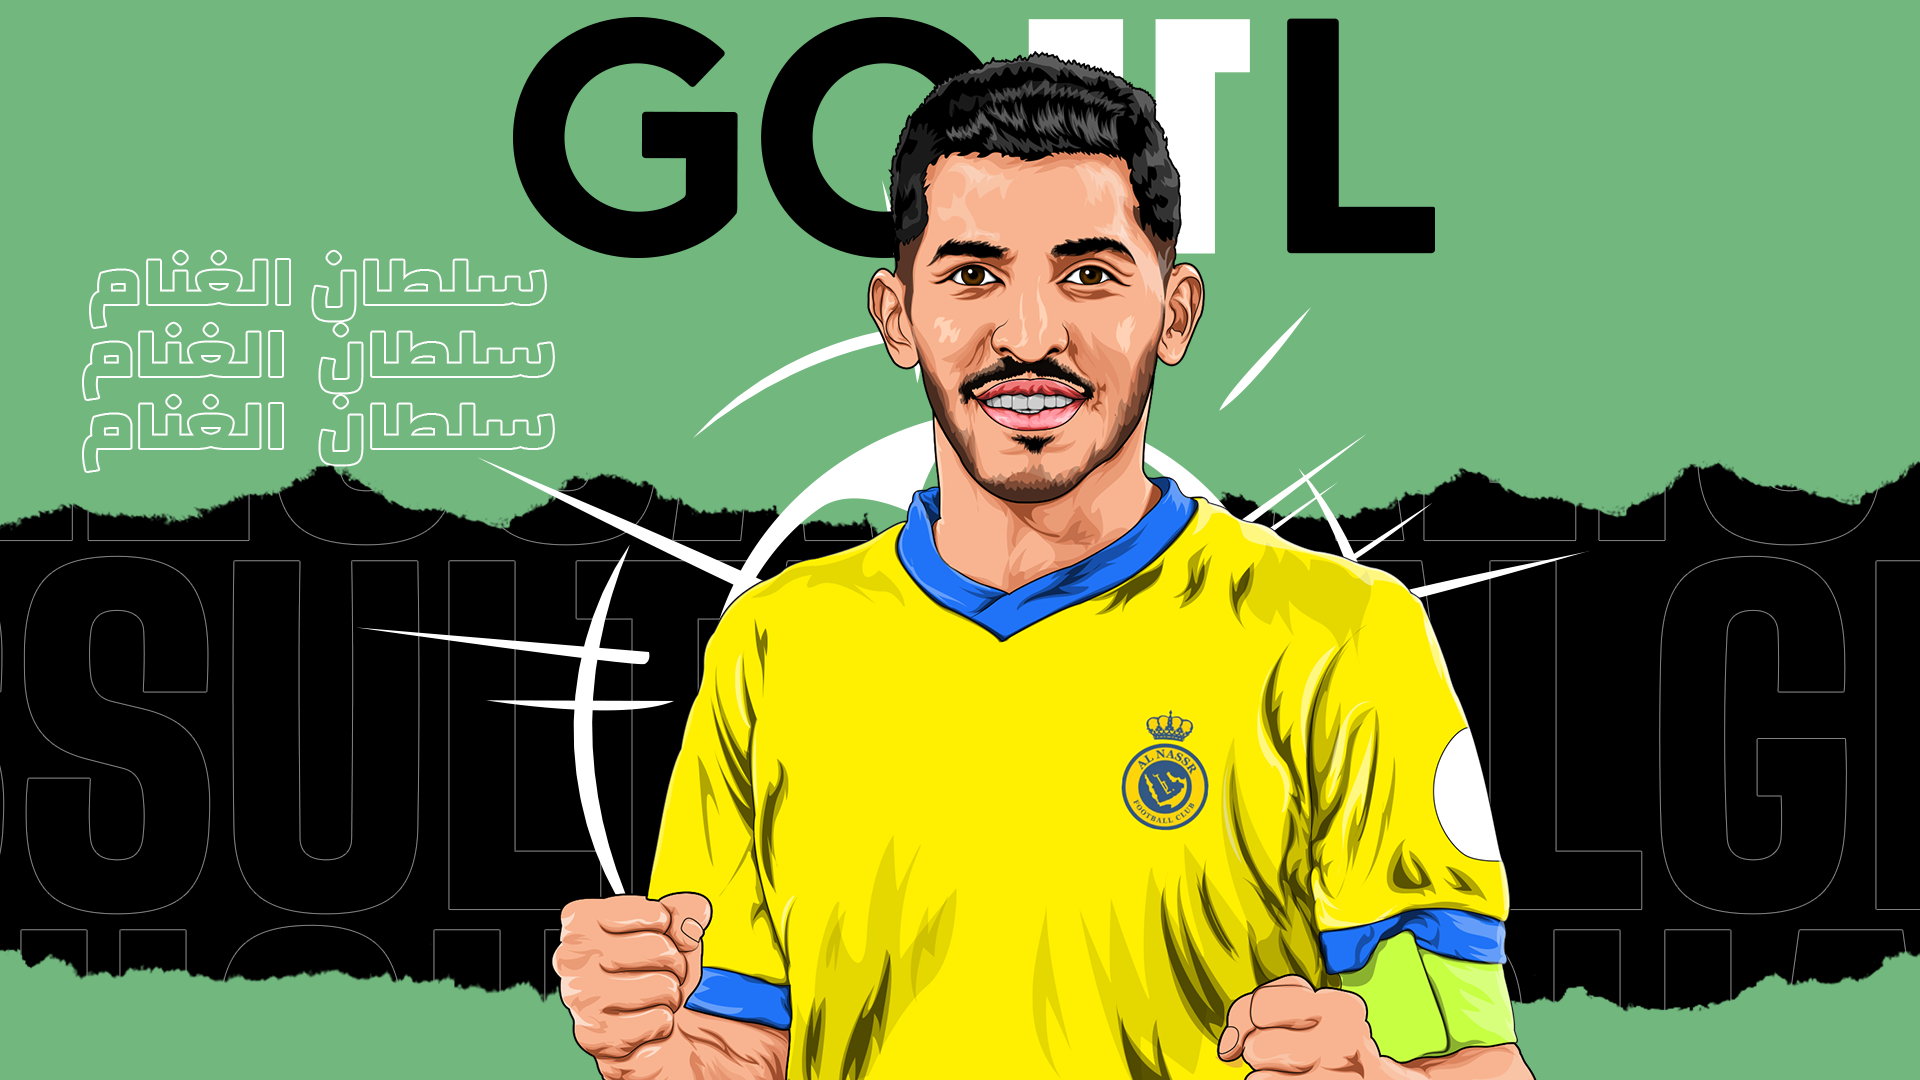 goal 11 - Sultan Al-Ghanam 2022